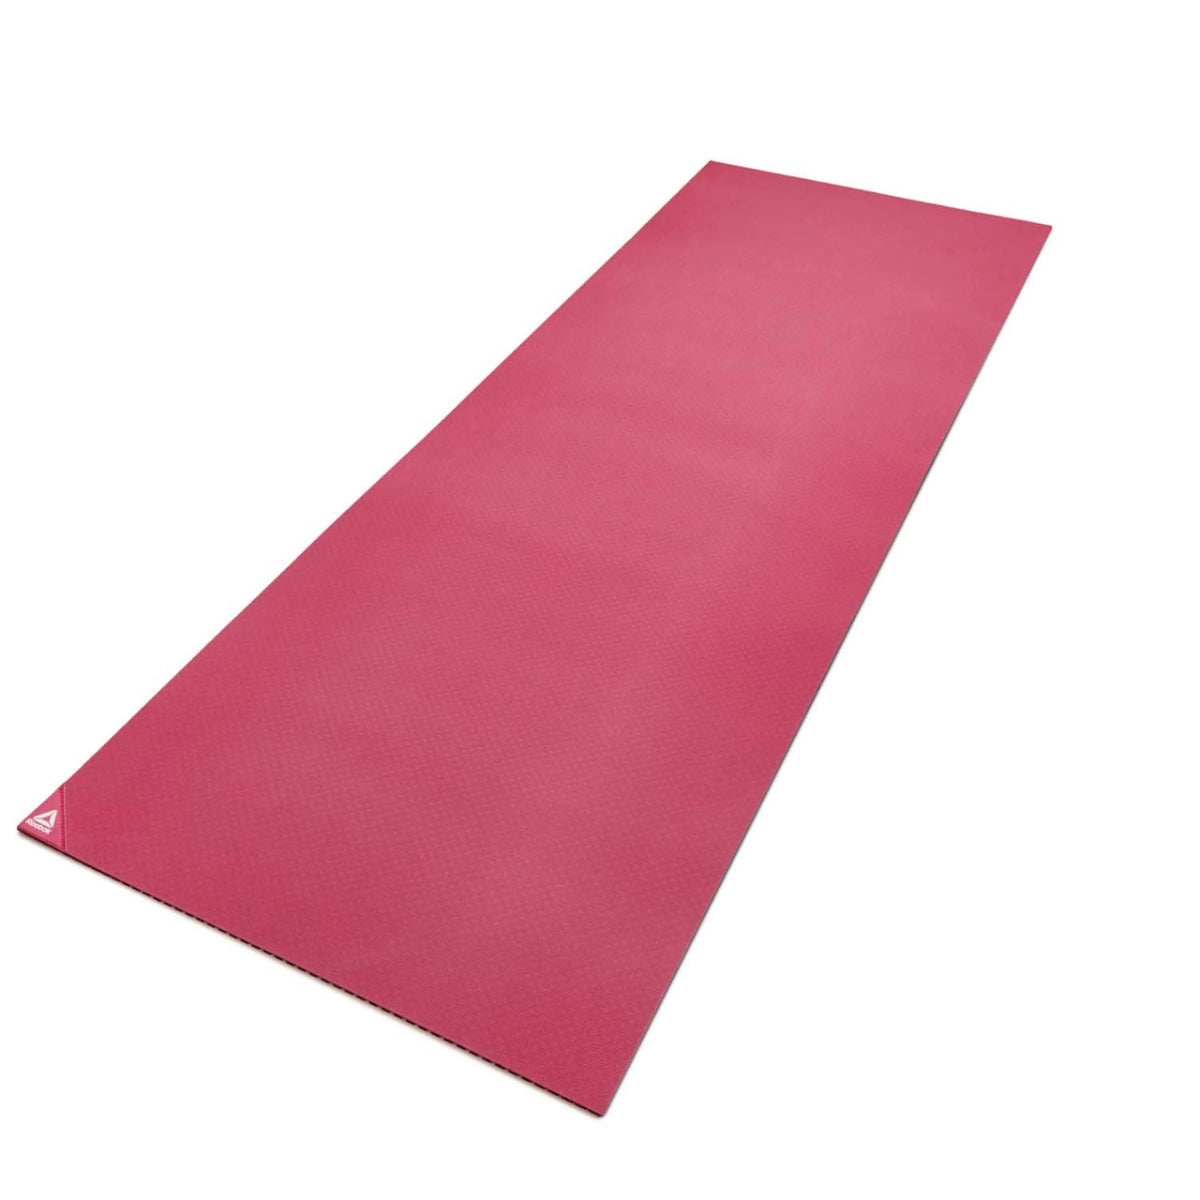 Reebok Mesh Fitness Mat Pink/Grey